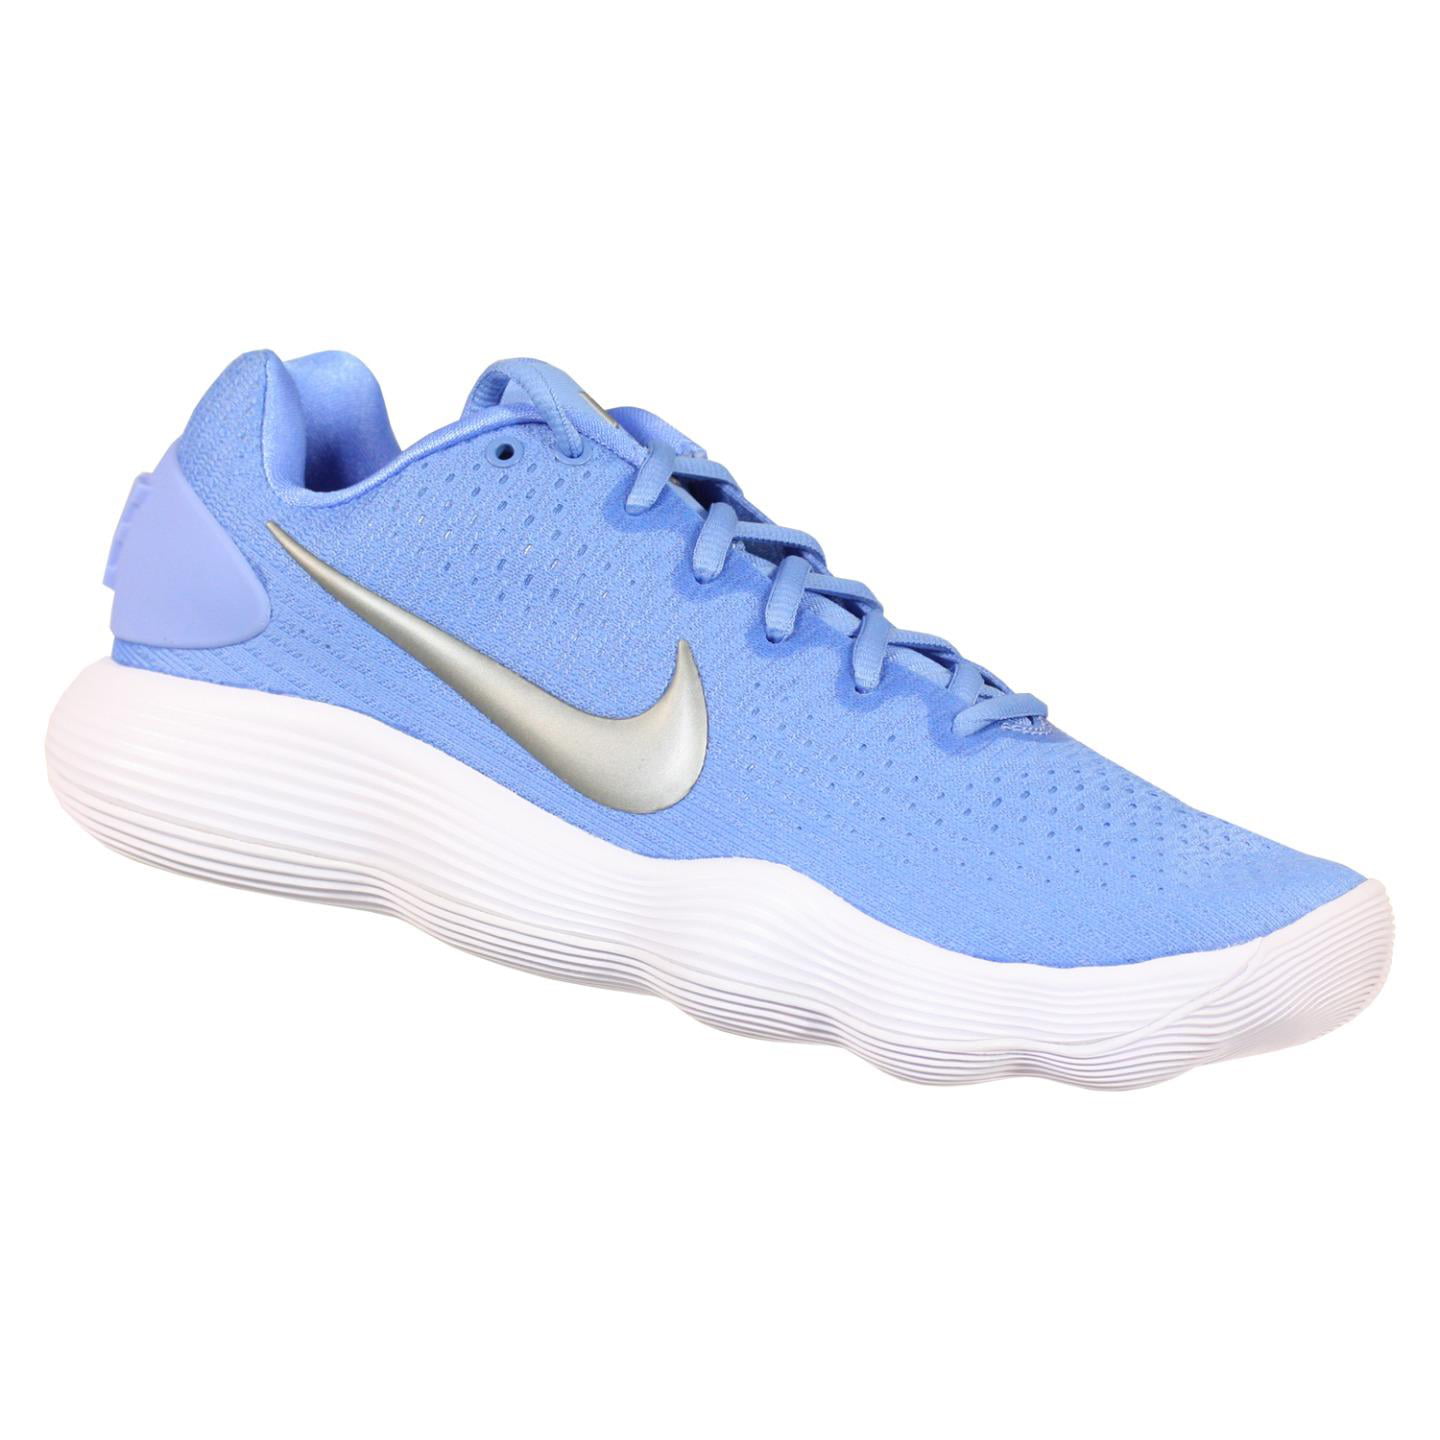 carolina blue basketball shoes